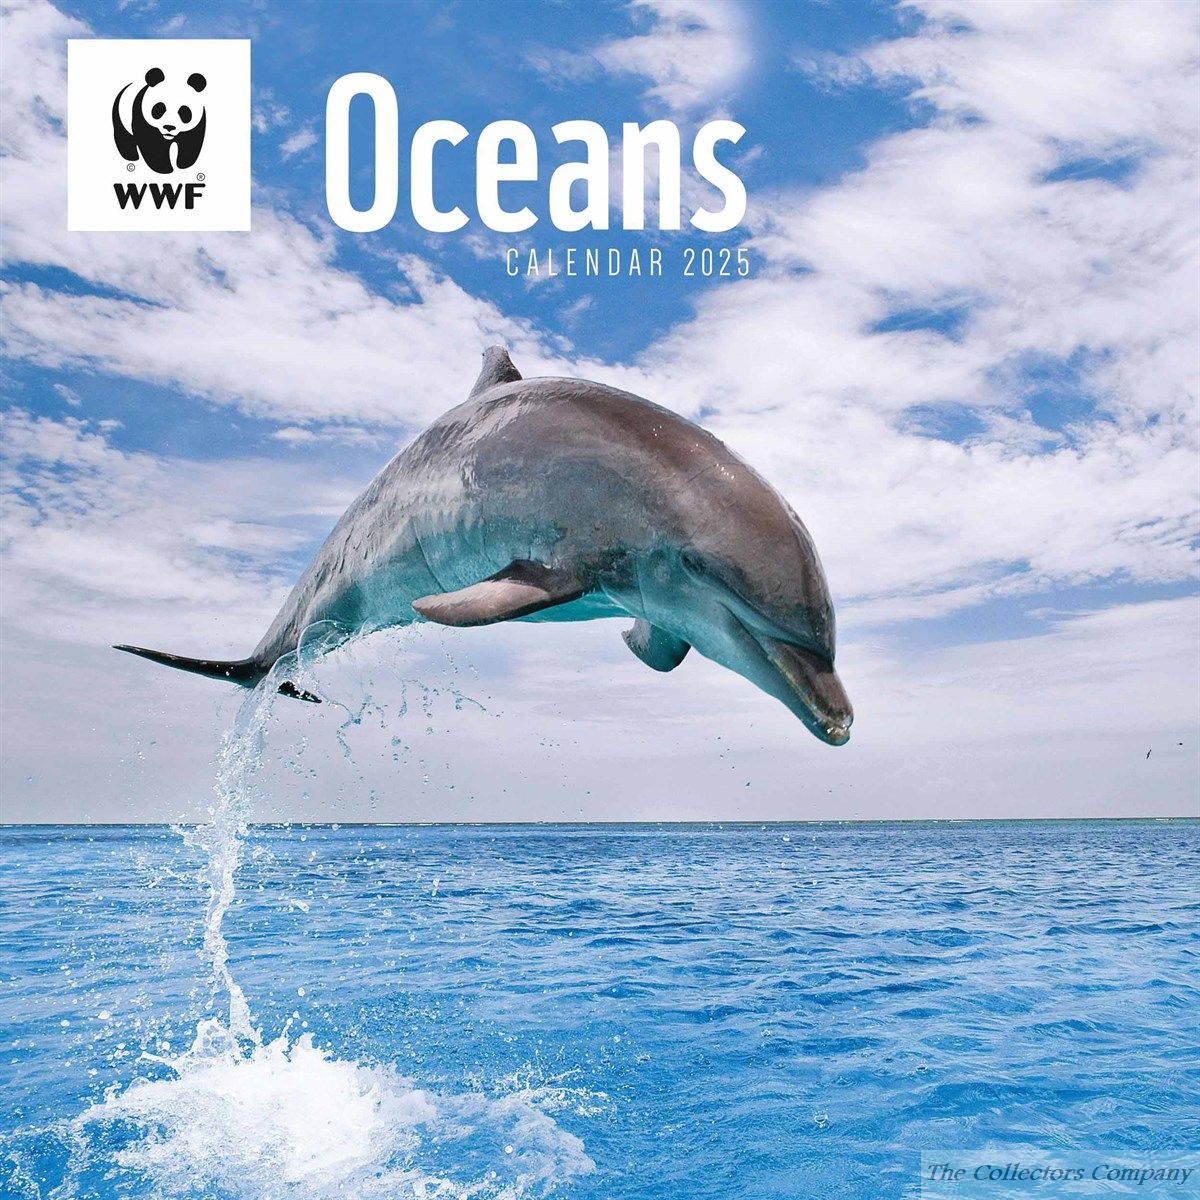 WWF Oceans Calendar 2025